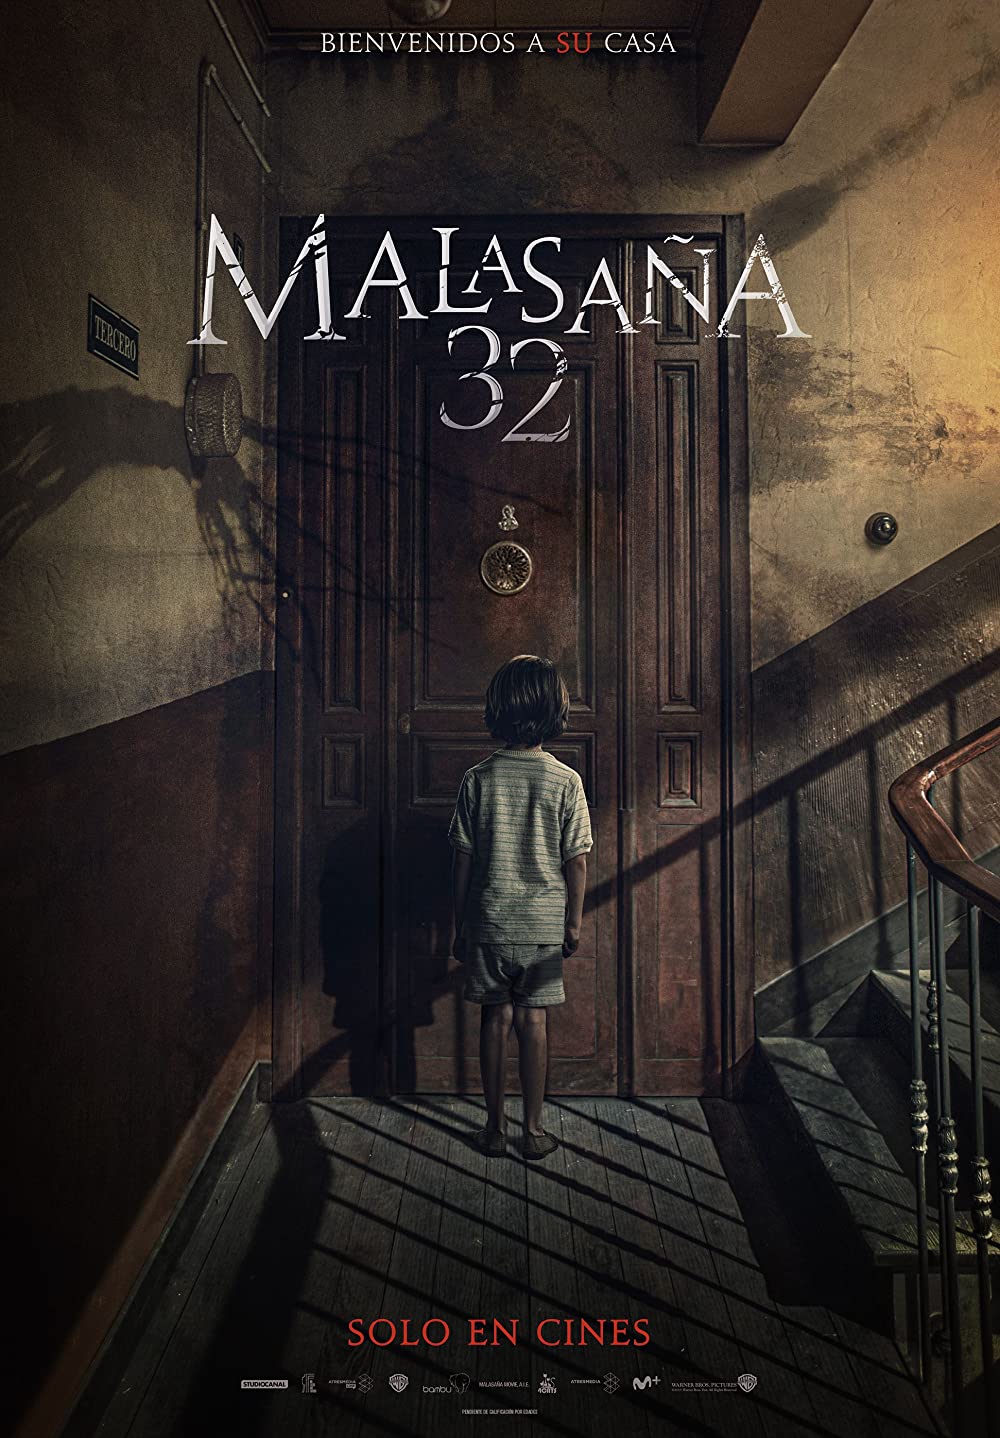 32 Malasana Street (2020) DVD Release Date